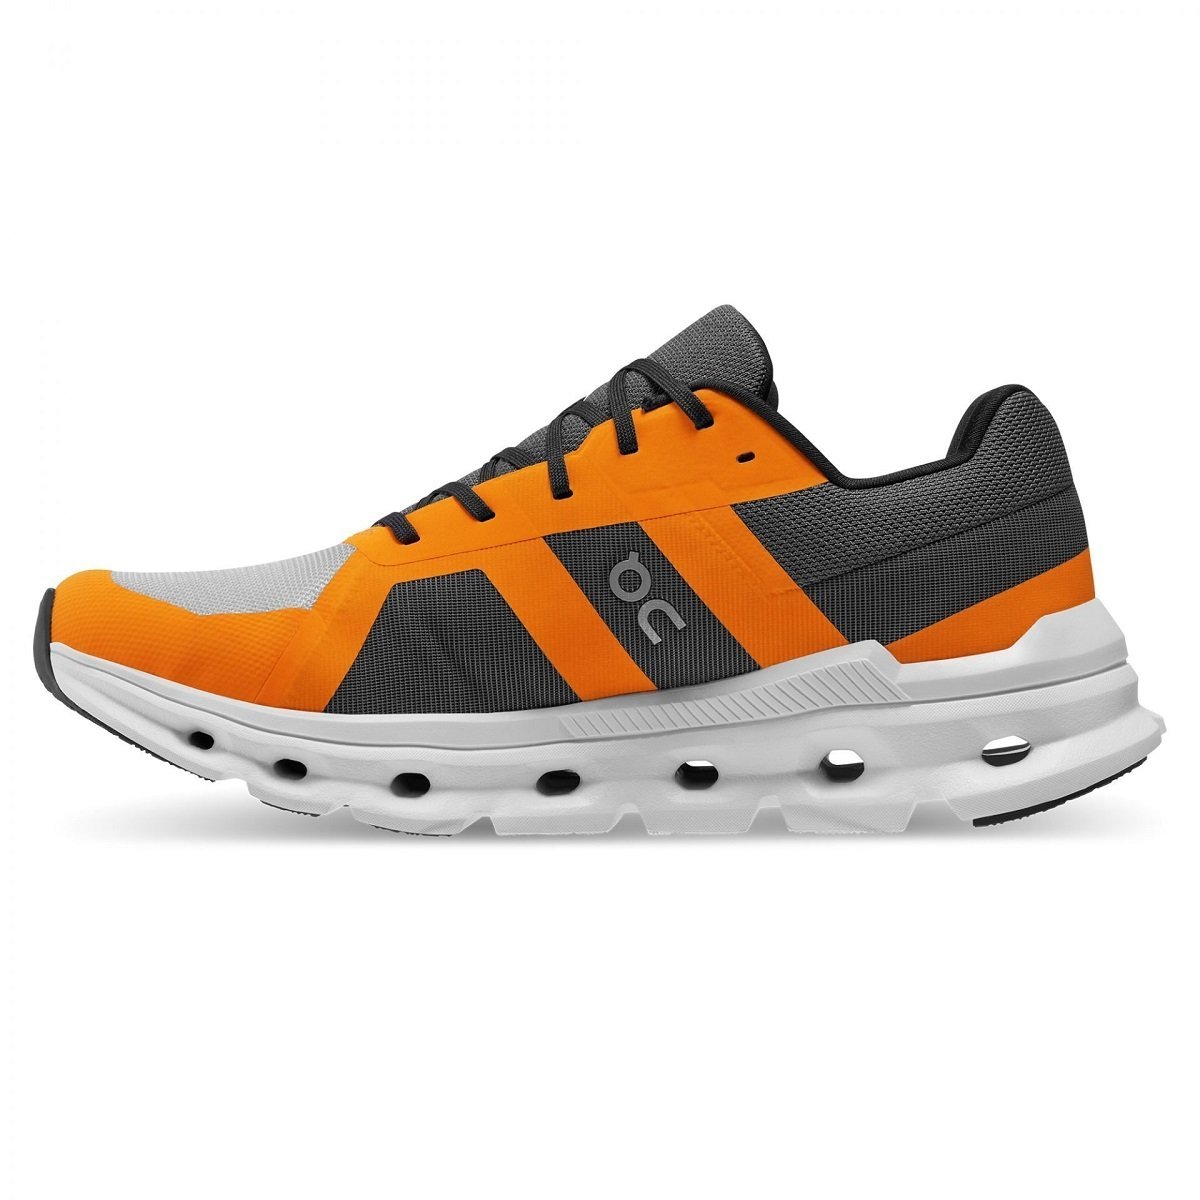 Topánky ON Cloudrunner M - grey/orange